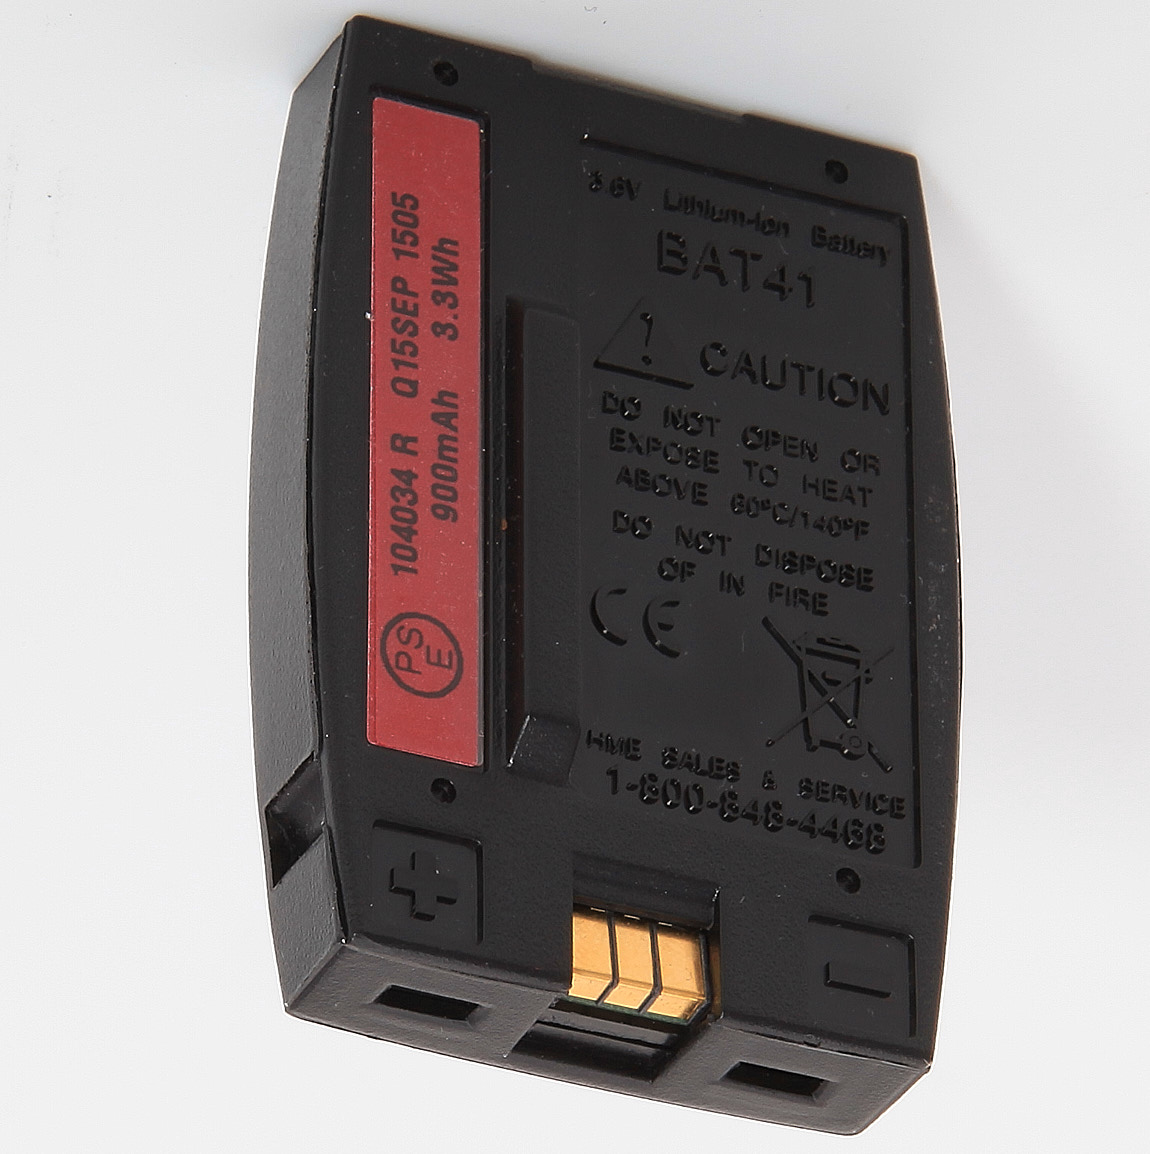 New Clear-Com HME BAT41 RED Lithium Ion Battery Pac 3.6V 900mAh 3.3Wh OEM BAT 41 